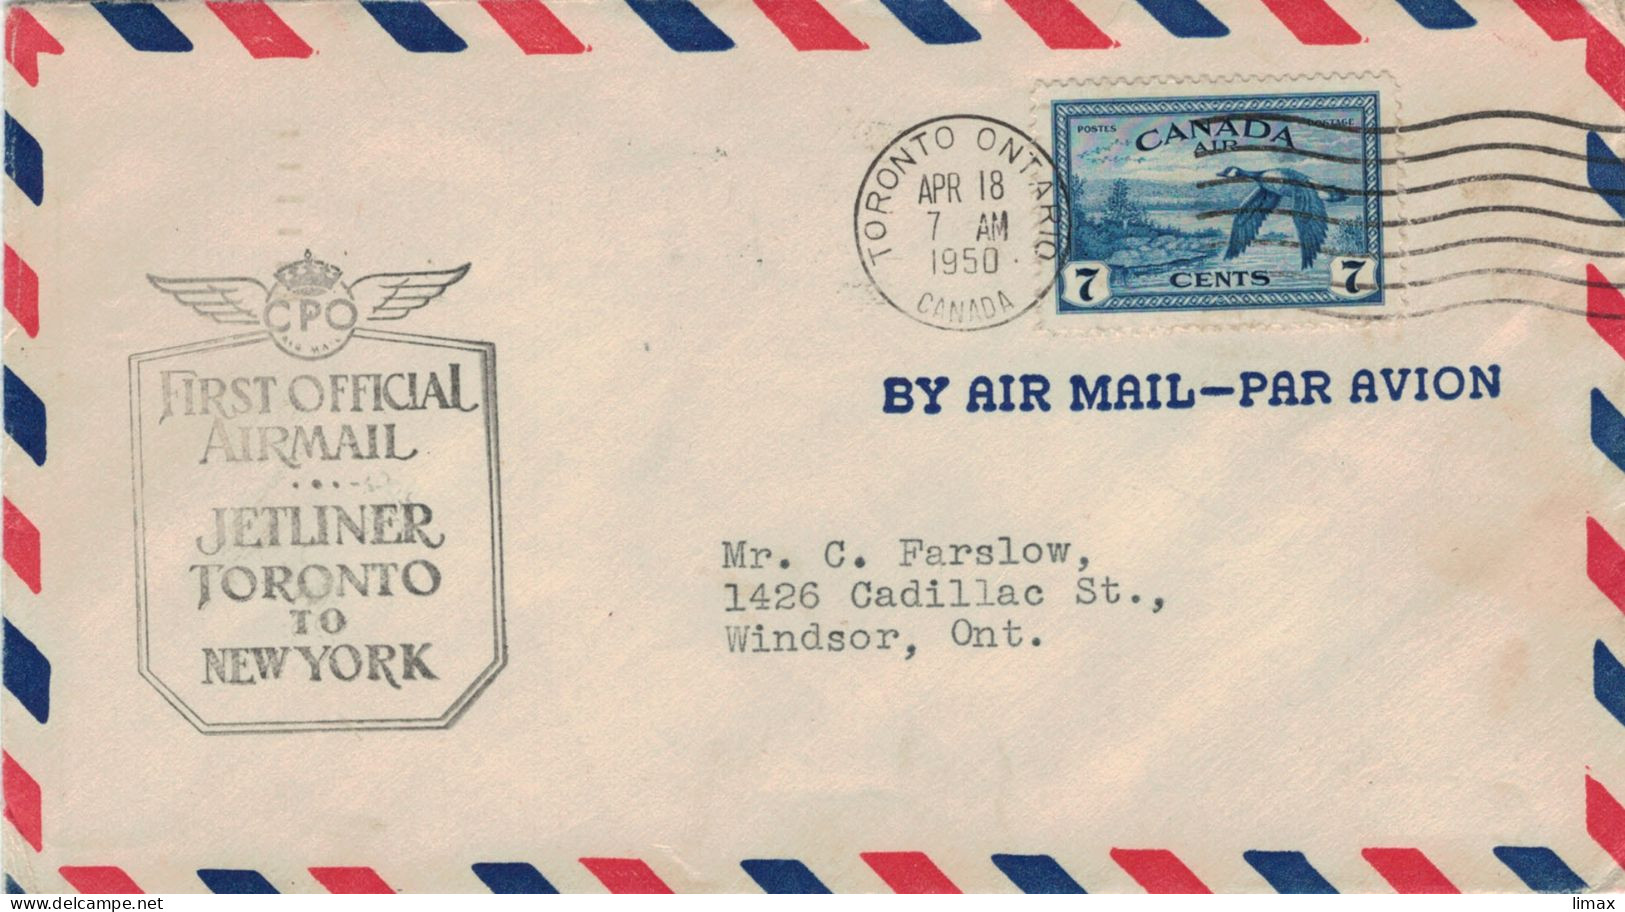 Toronto Ontario 1950 > Windsor - Wildgans Flugpost Jetliner Toronto - New York - Covers & Documents